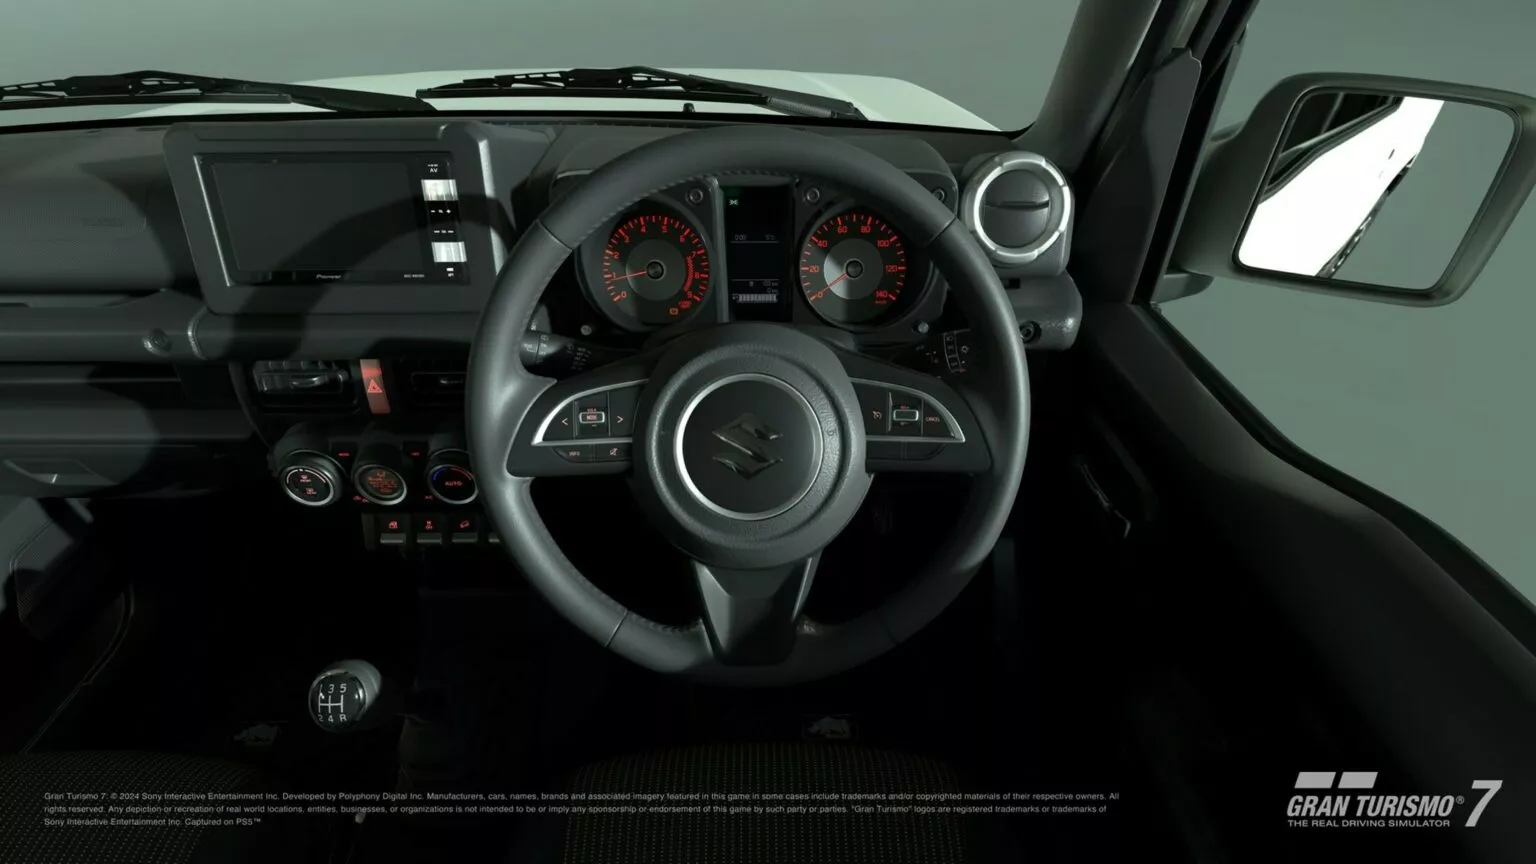 Suzuki Jimny Gran Turismo 6 1536x864 1